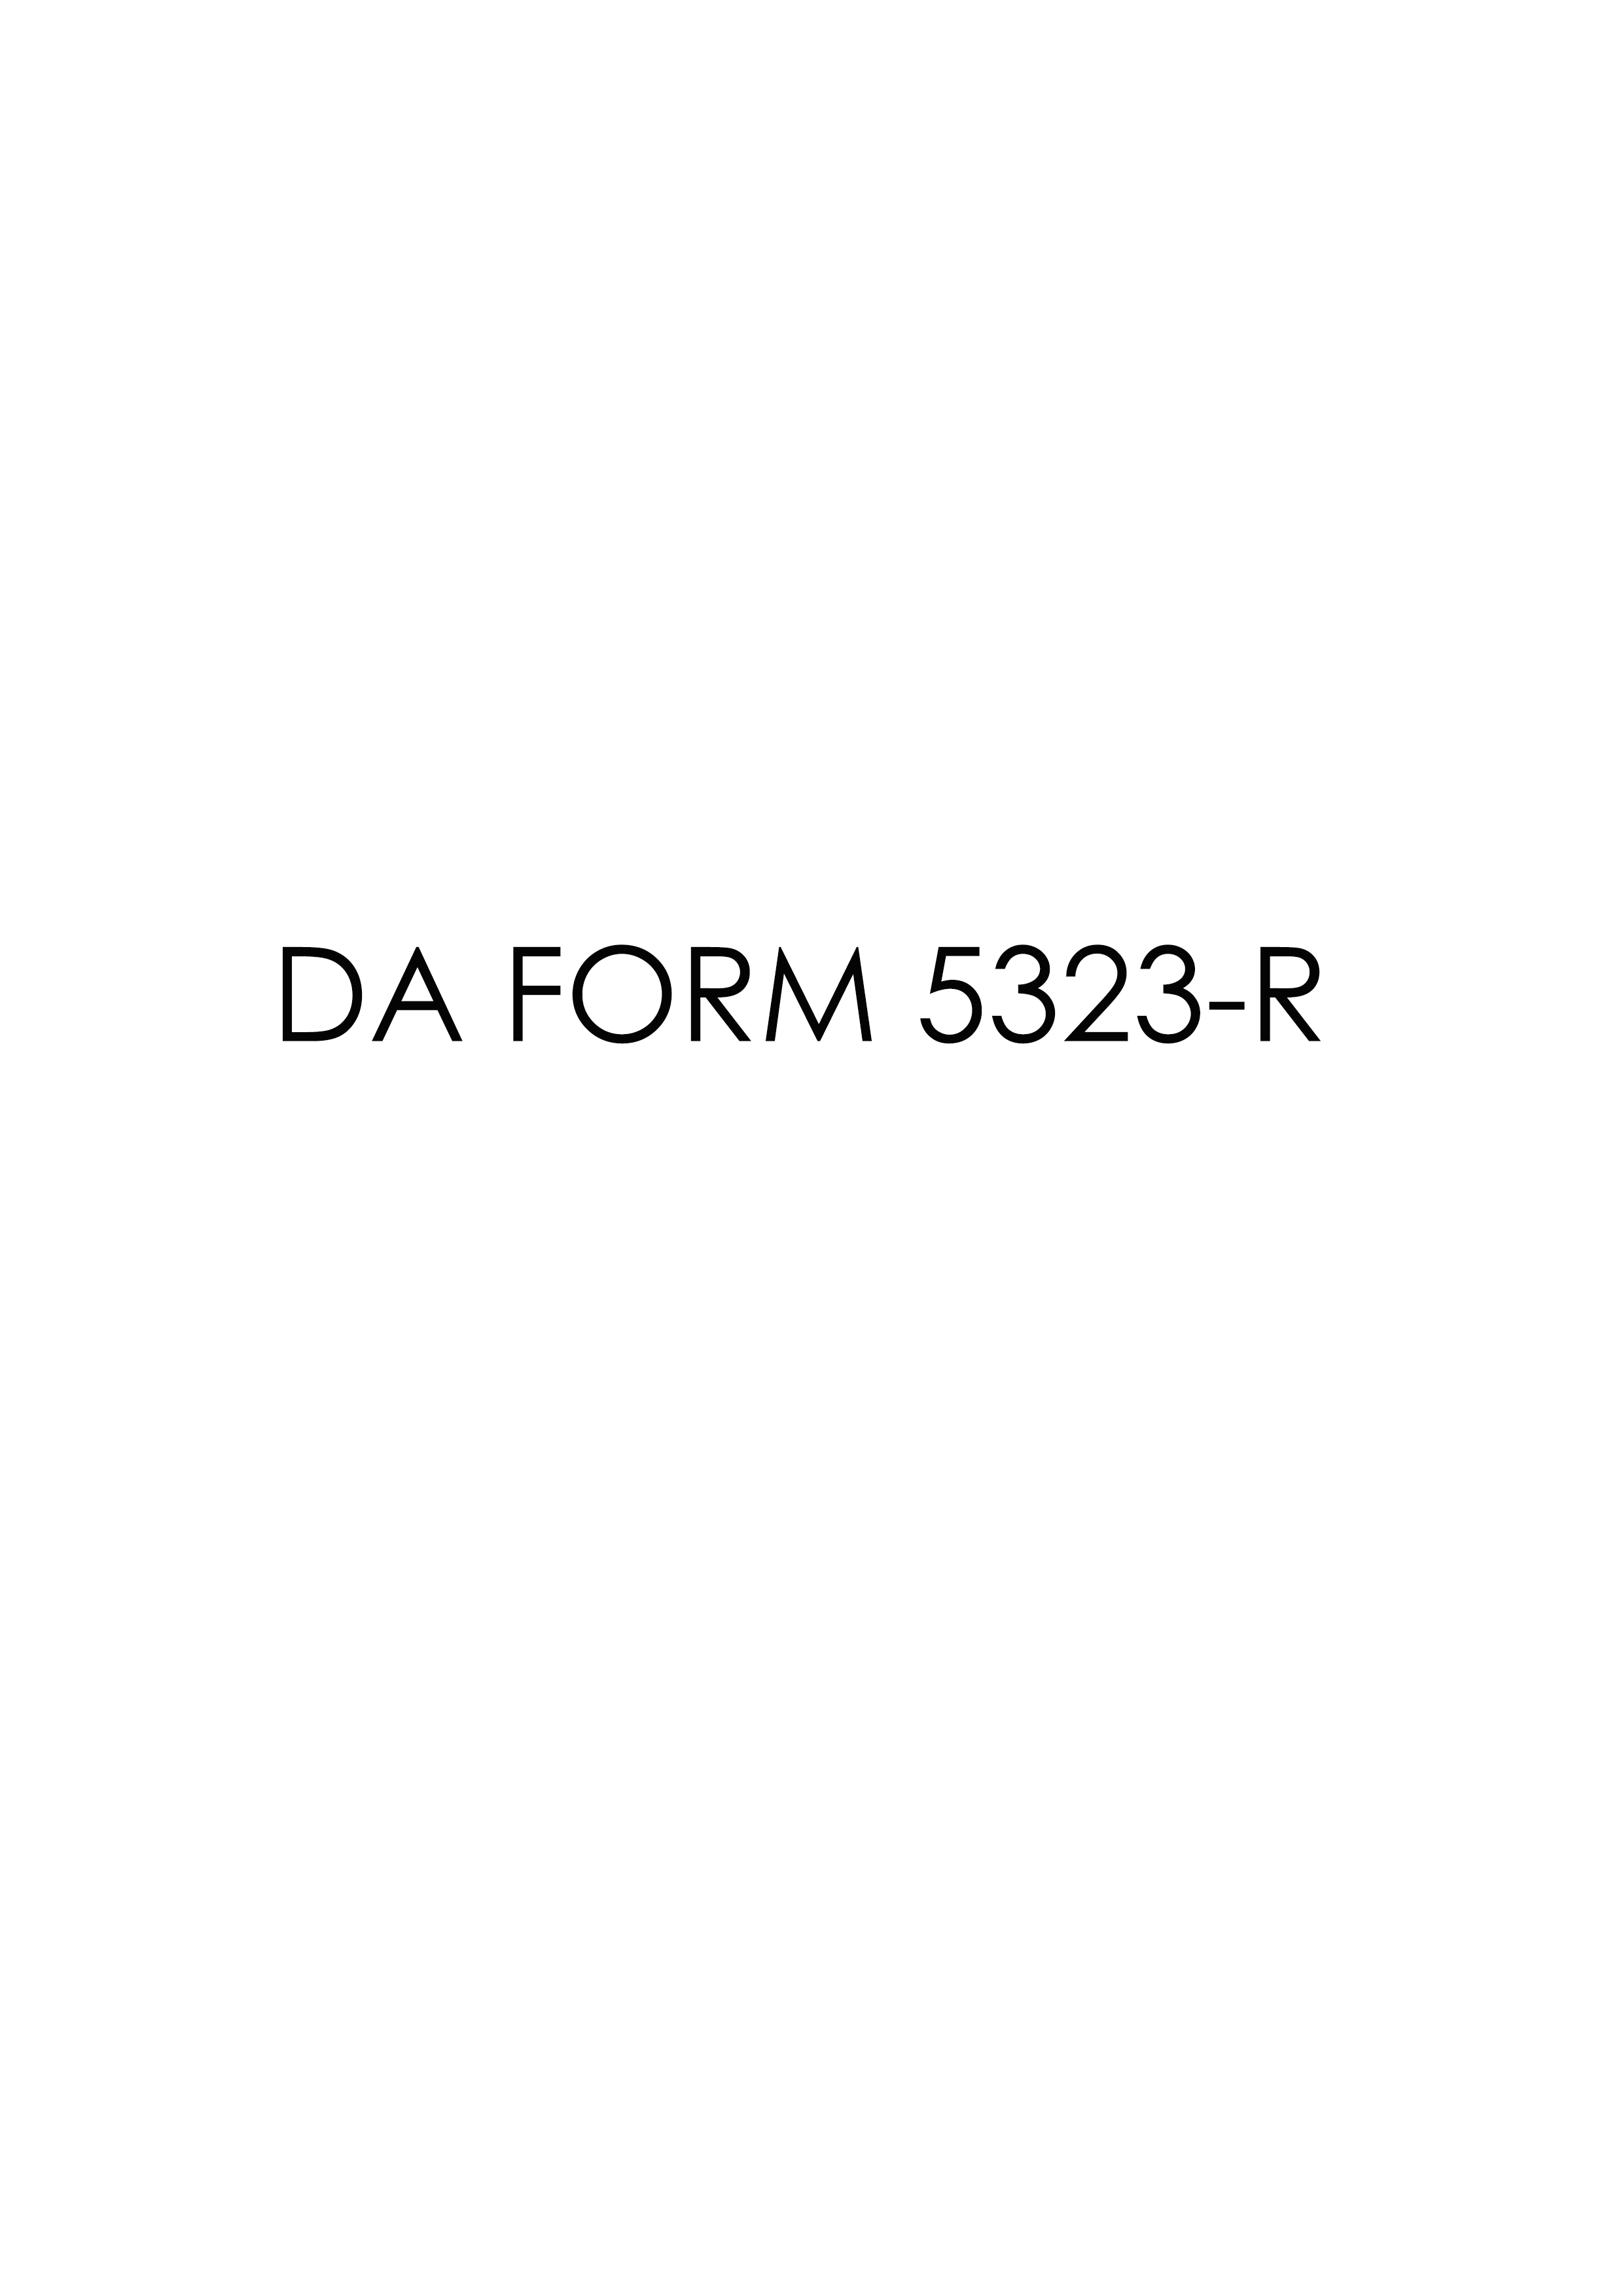 da Form 5323-R fillable